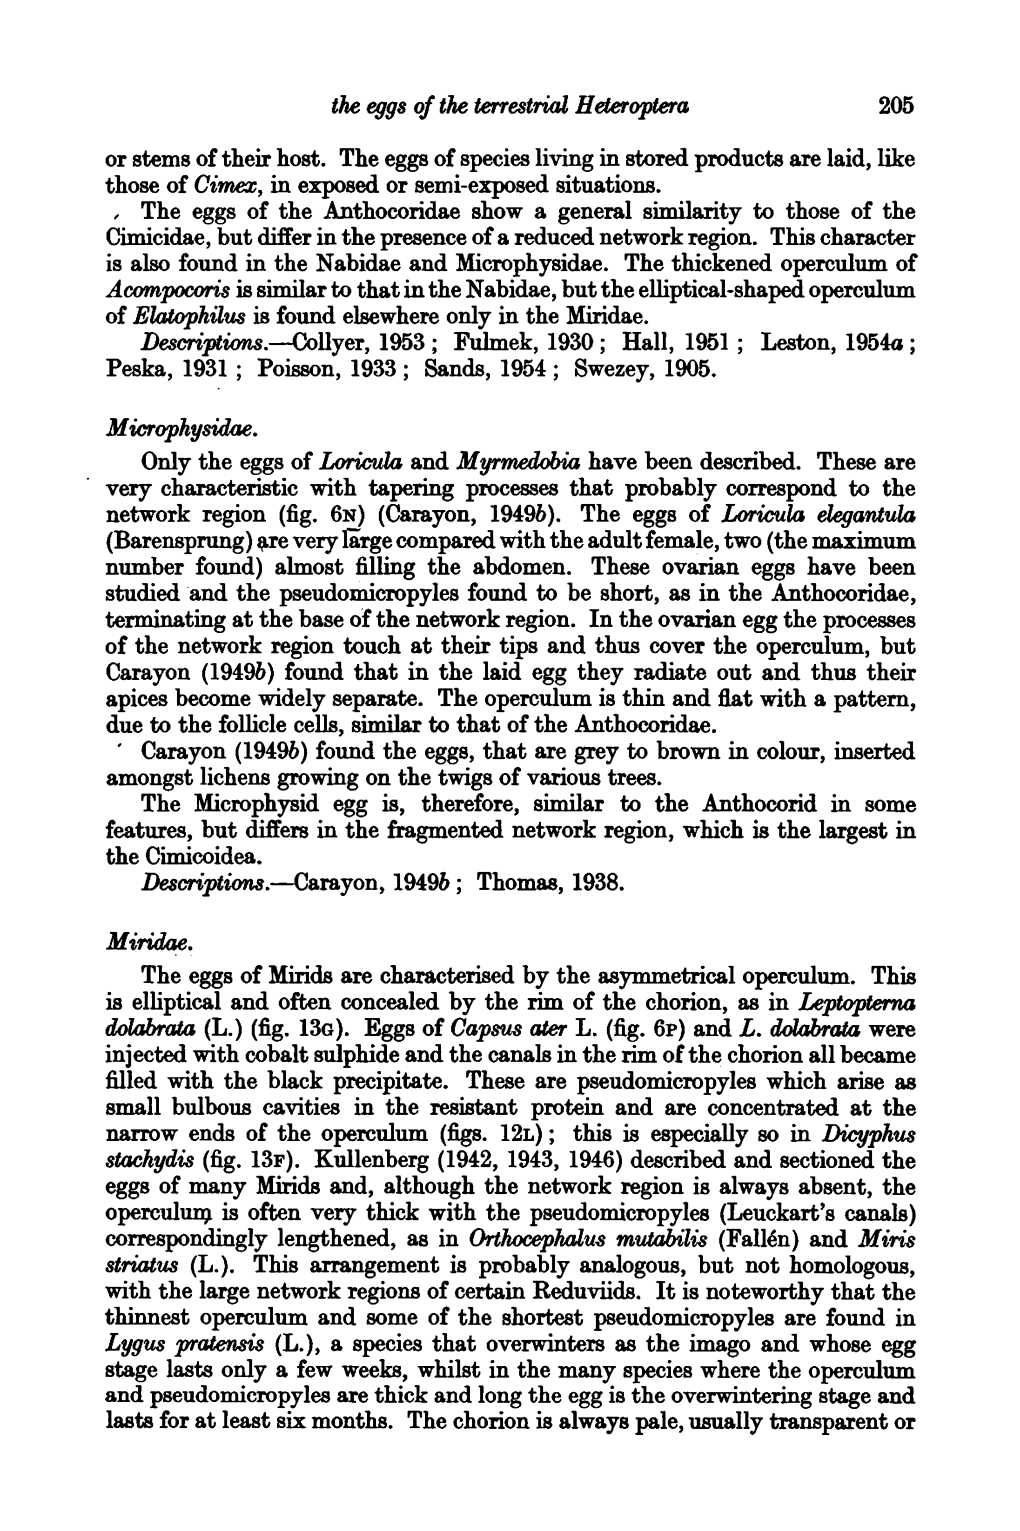 Descriptions.-Collyer, 1953 ; Fubnek, 1930; Hall, 1951; Leston, 1954A; Peska, 1931; Poisson, 1933; Sands, 1954; Swezey, 1905